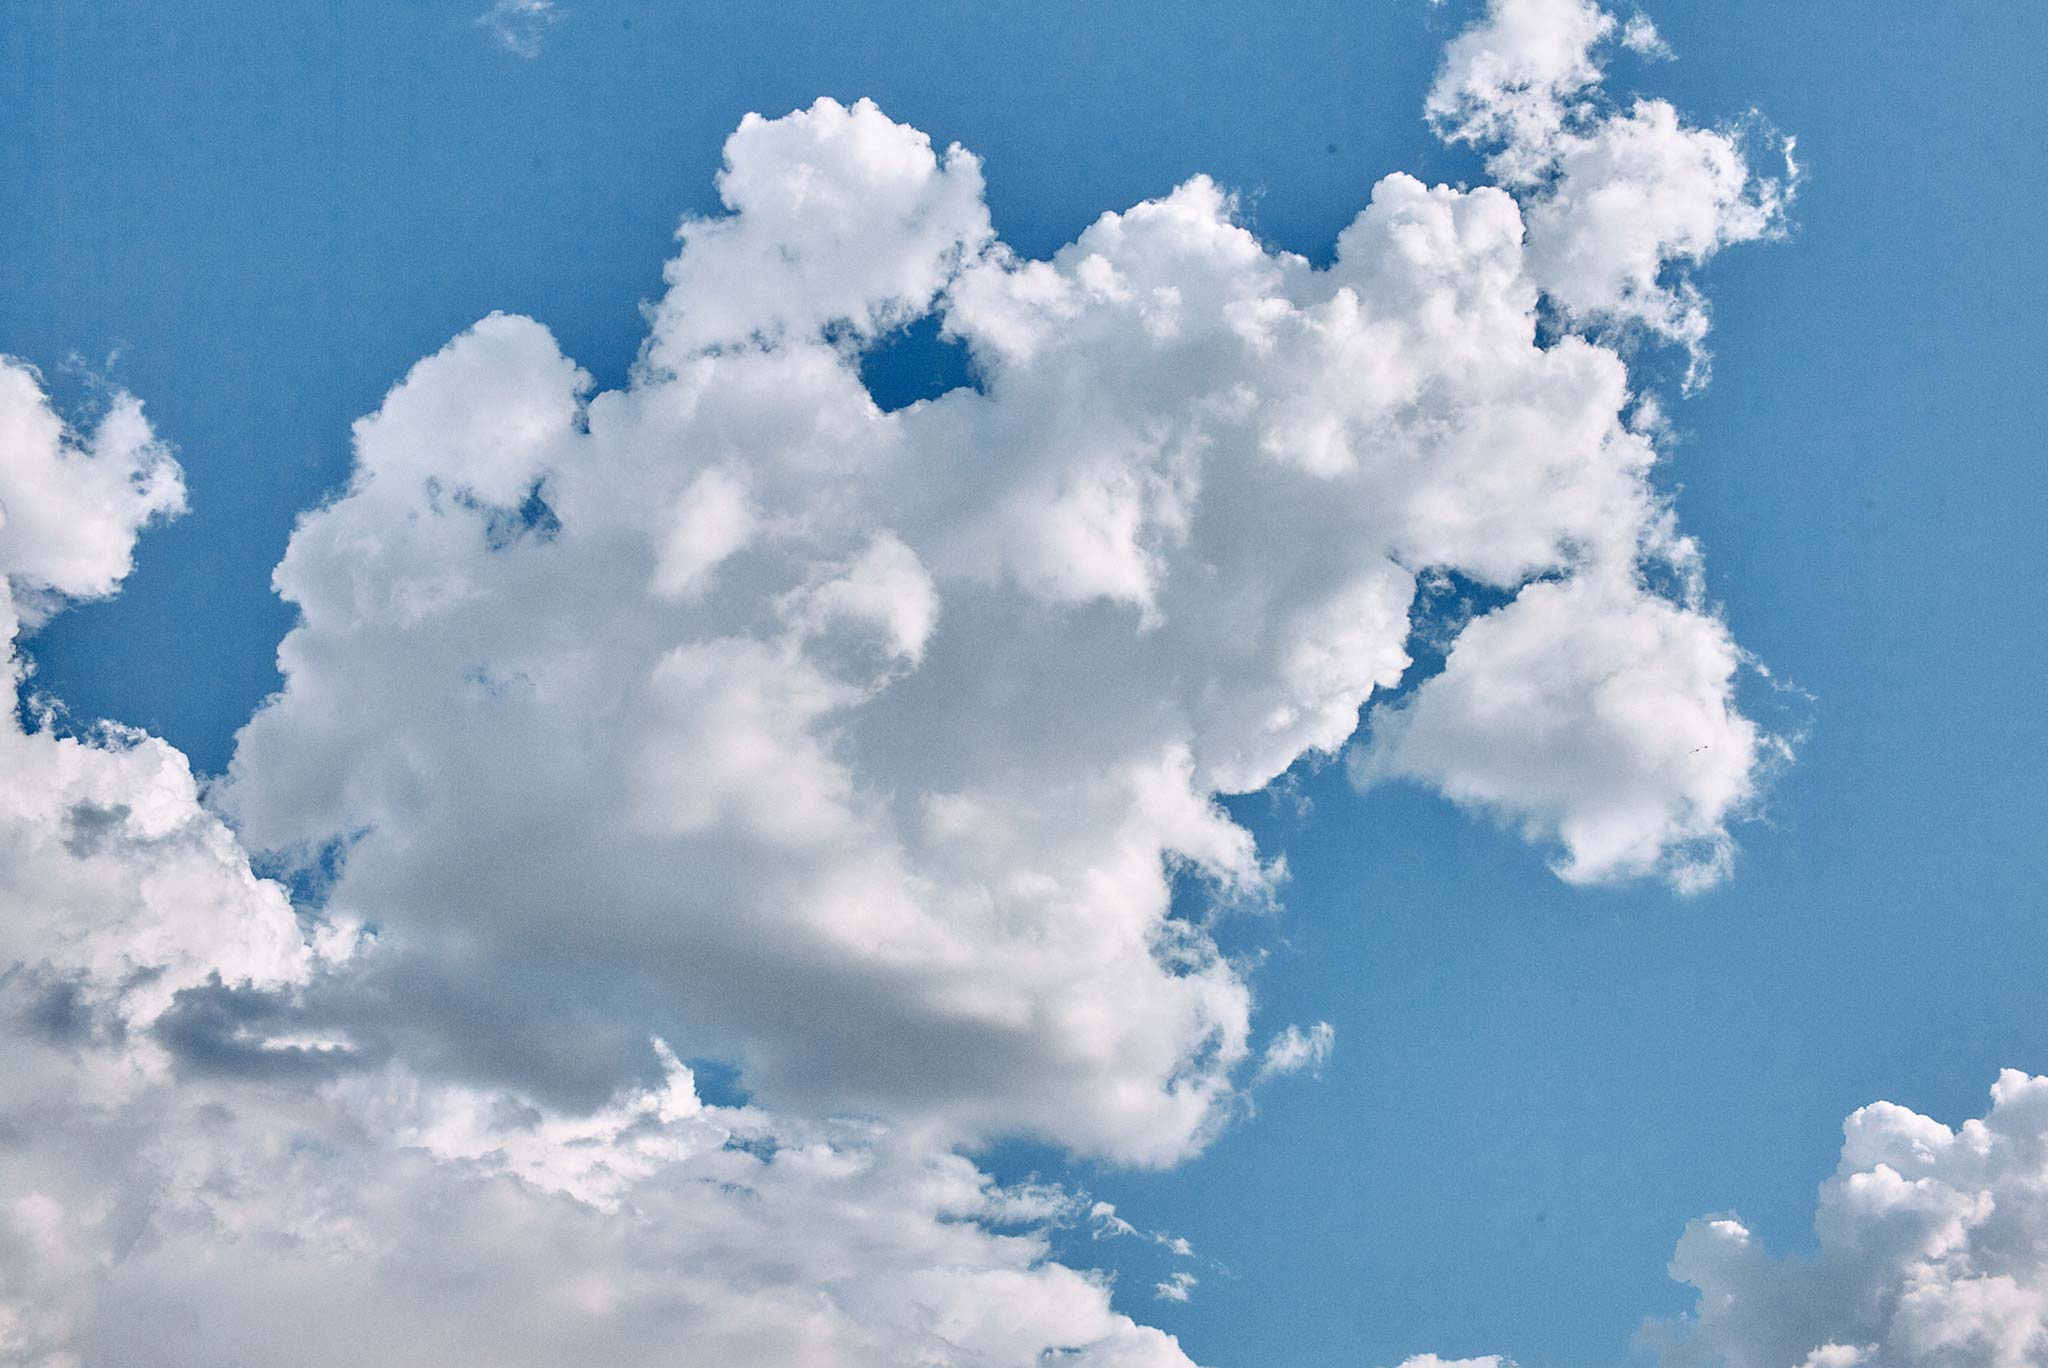 Morrisons-Meredith-Farm-House-Retreat-clouds-Leica-MP240